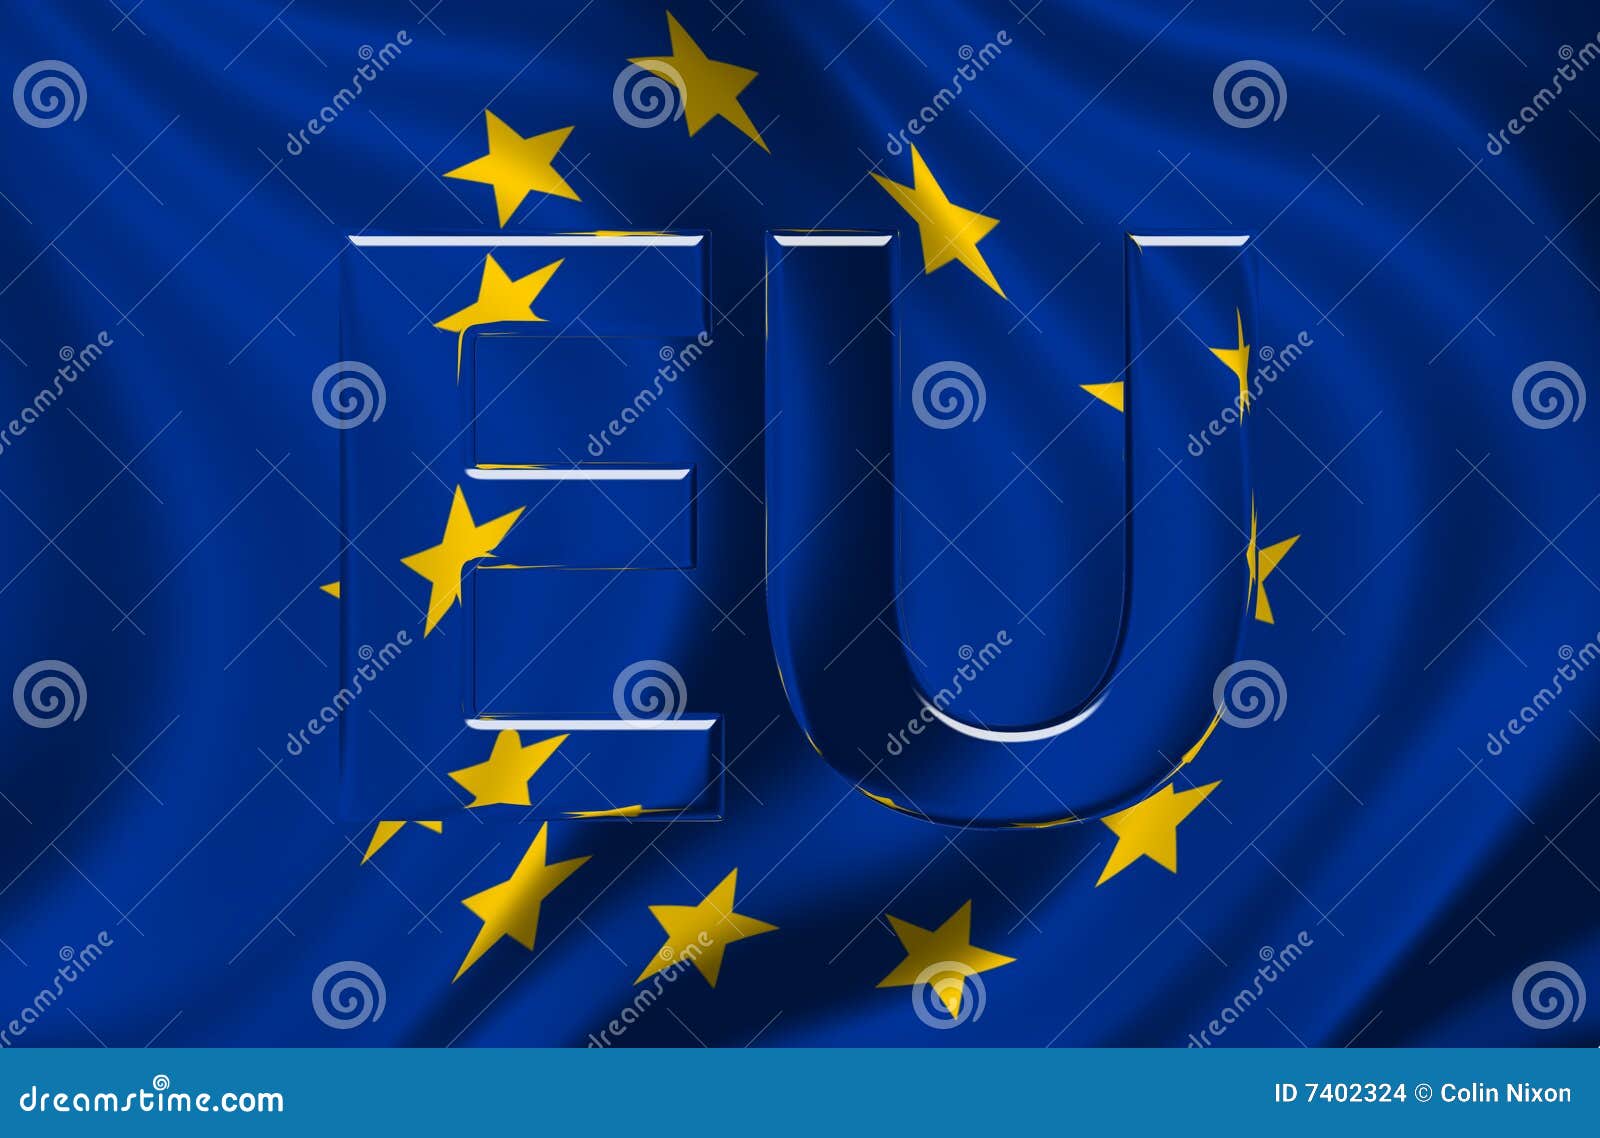 E flag. Евро звезды. Еврозона евро со звездами. Флаг европейского угольного Союза. Тень над Евросоюзом.